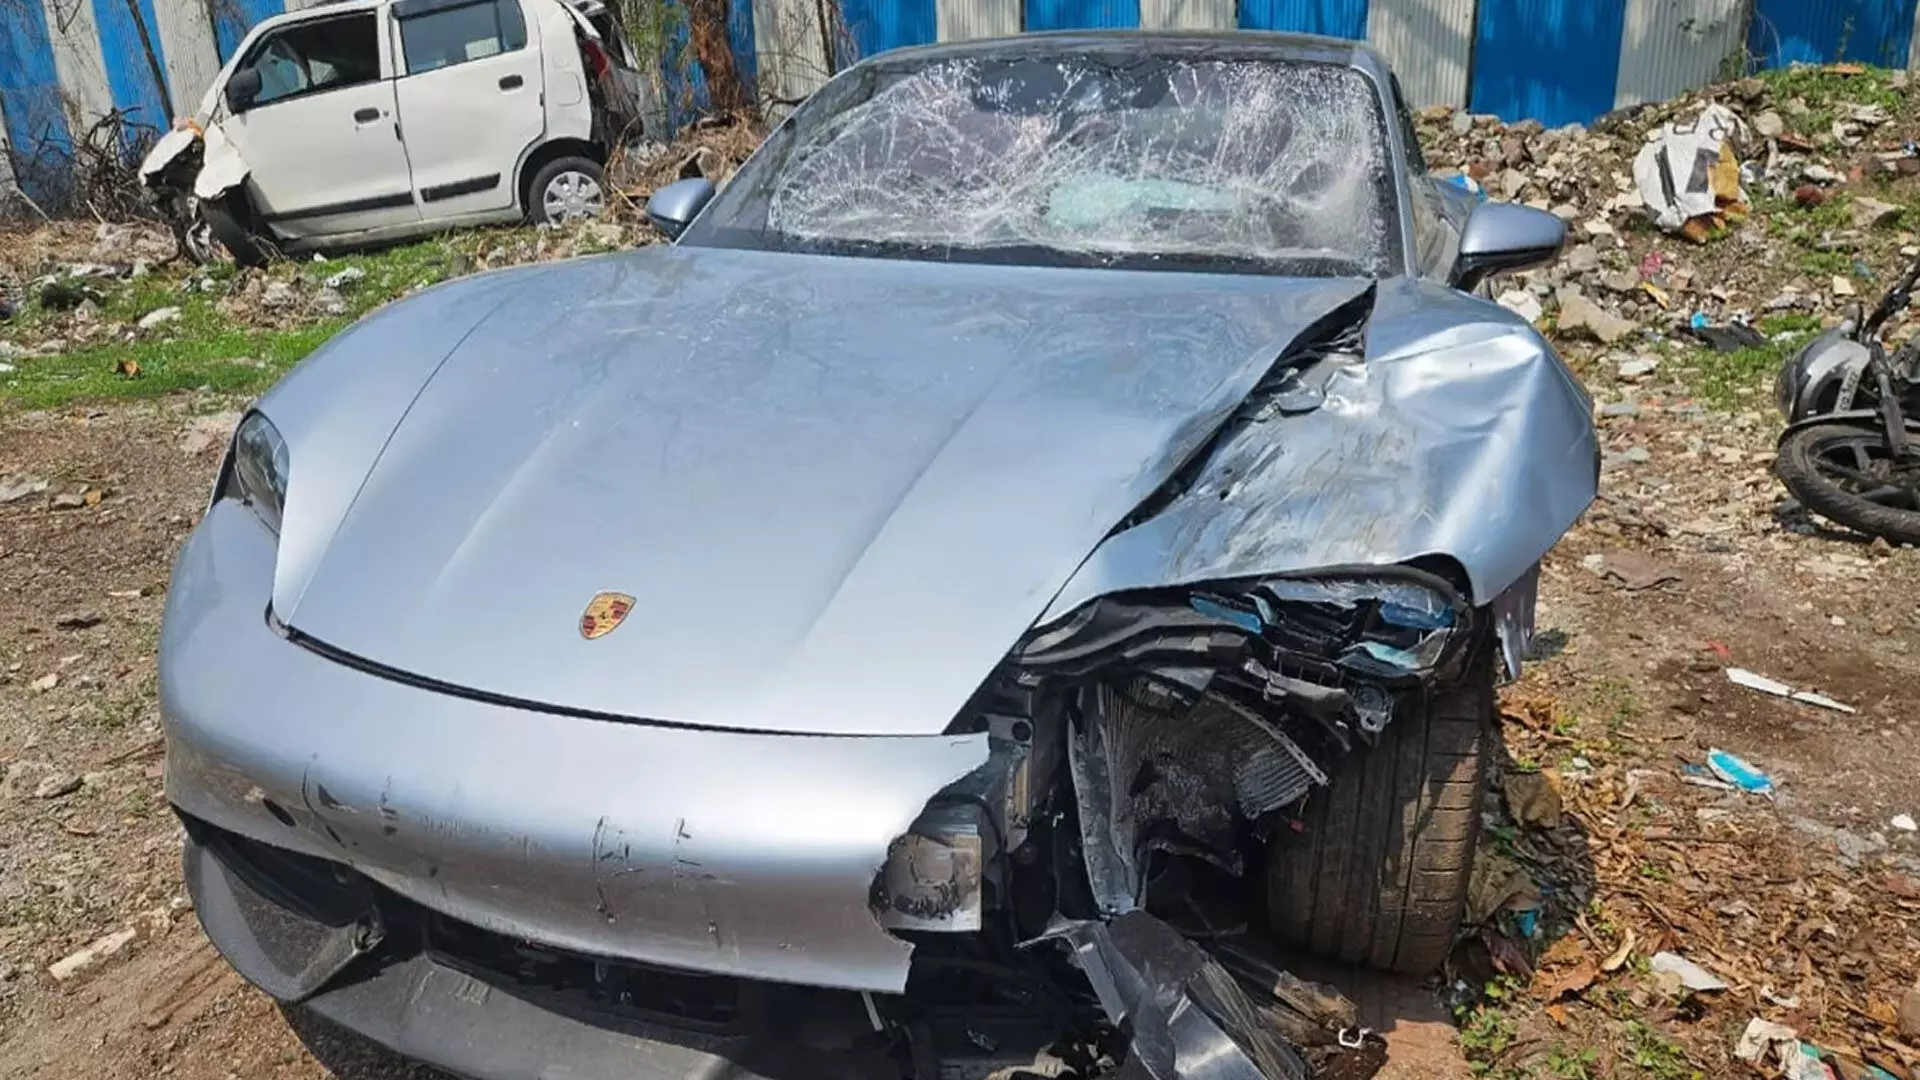 Pune Porsche crash case: भारत की भ्रष्ट व्यवस्था का पर्दाफाश